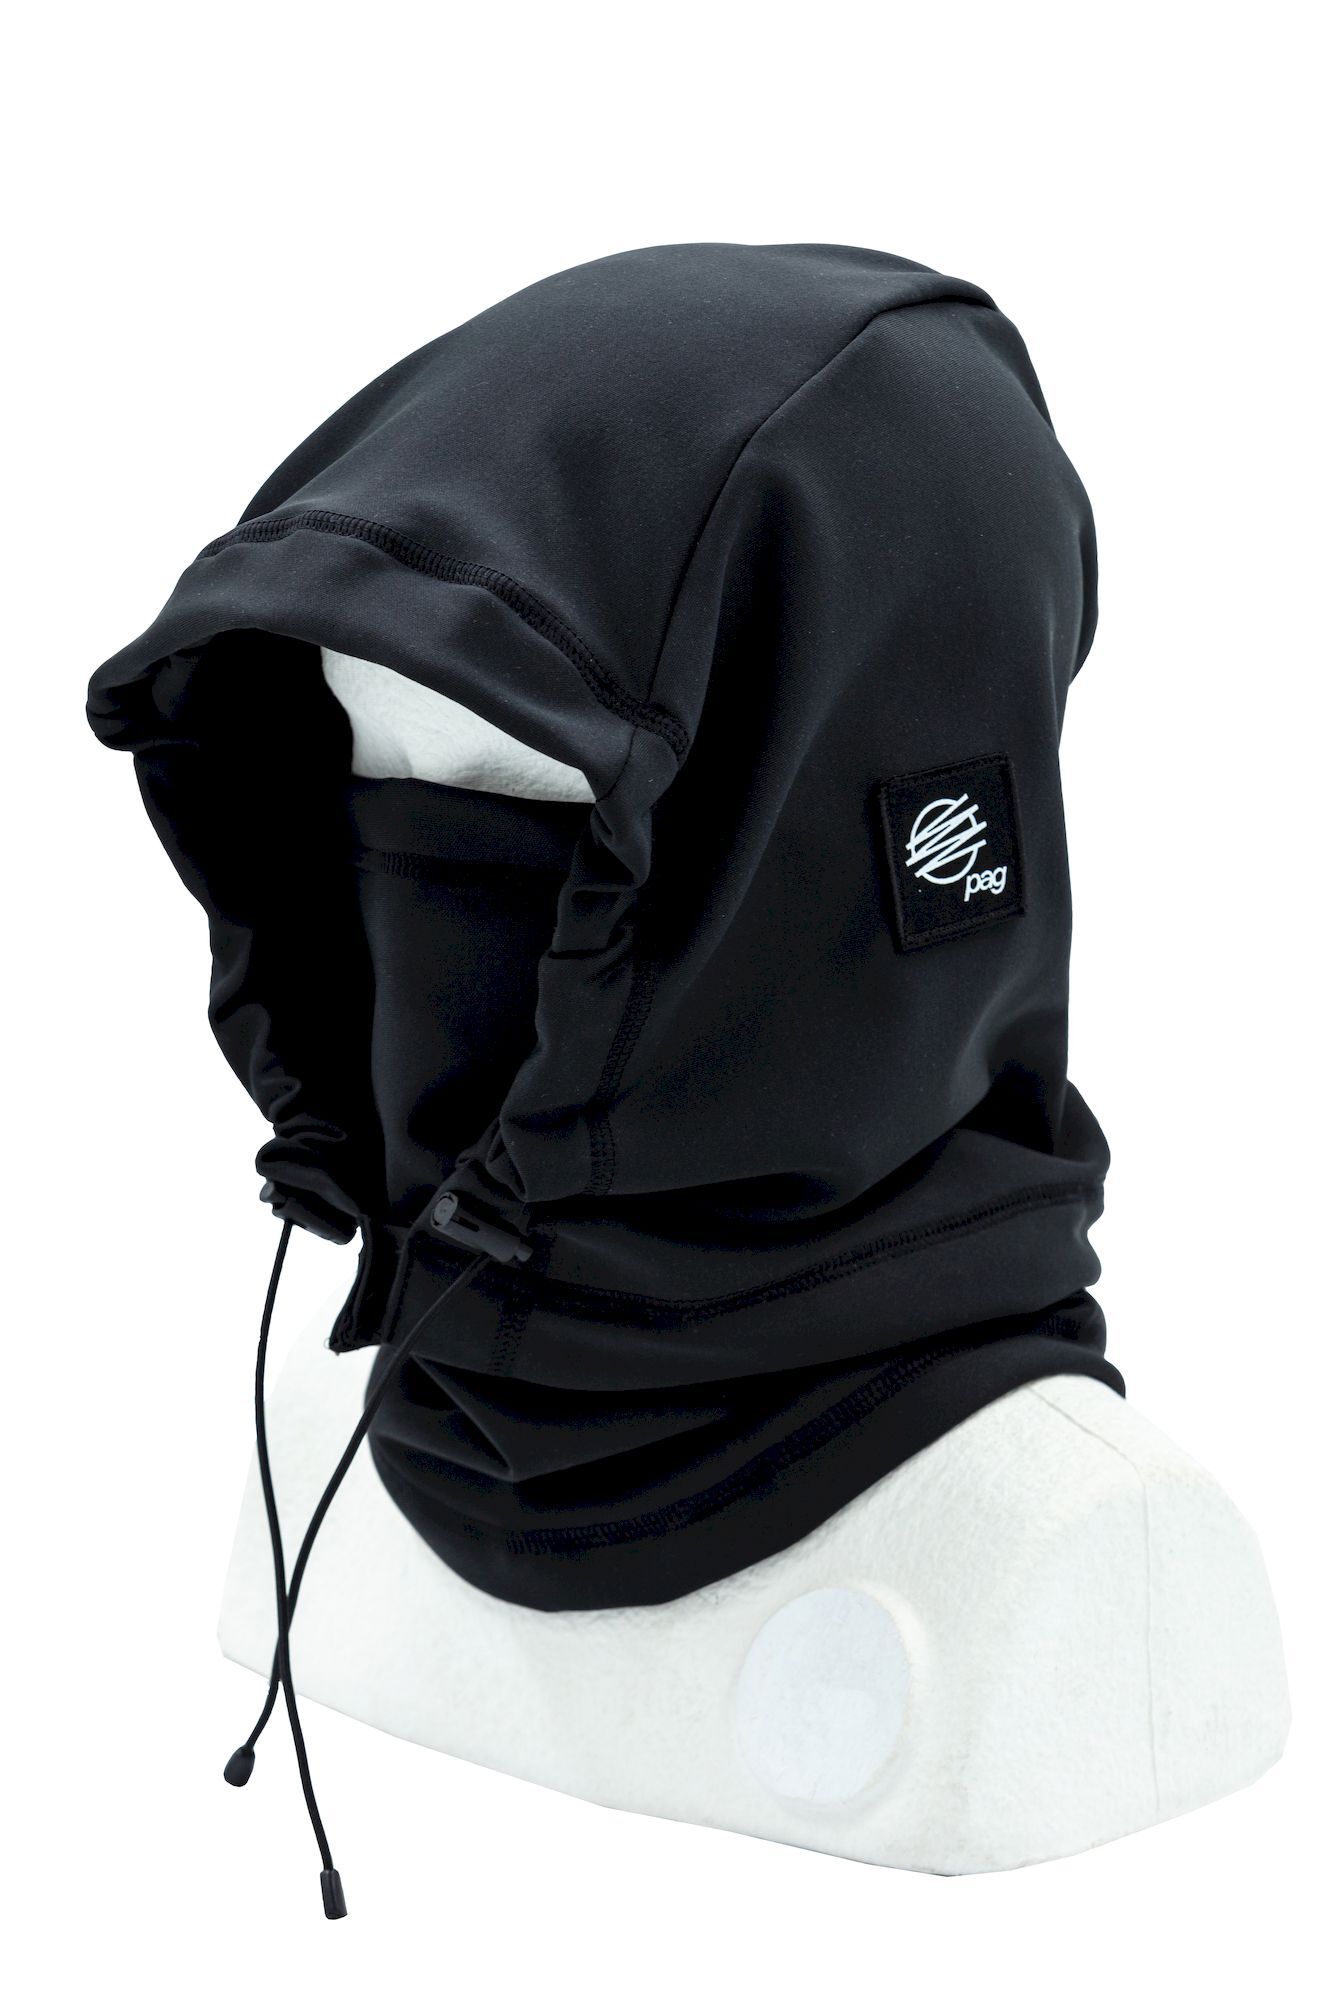 PAG Neckwear Hooded Adapt - Sturmhaube